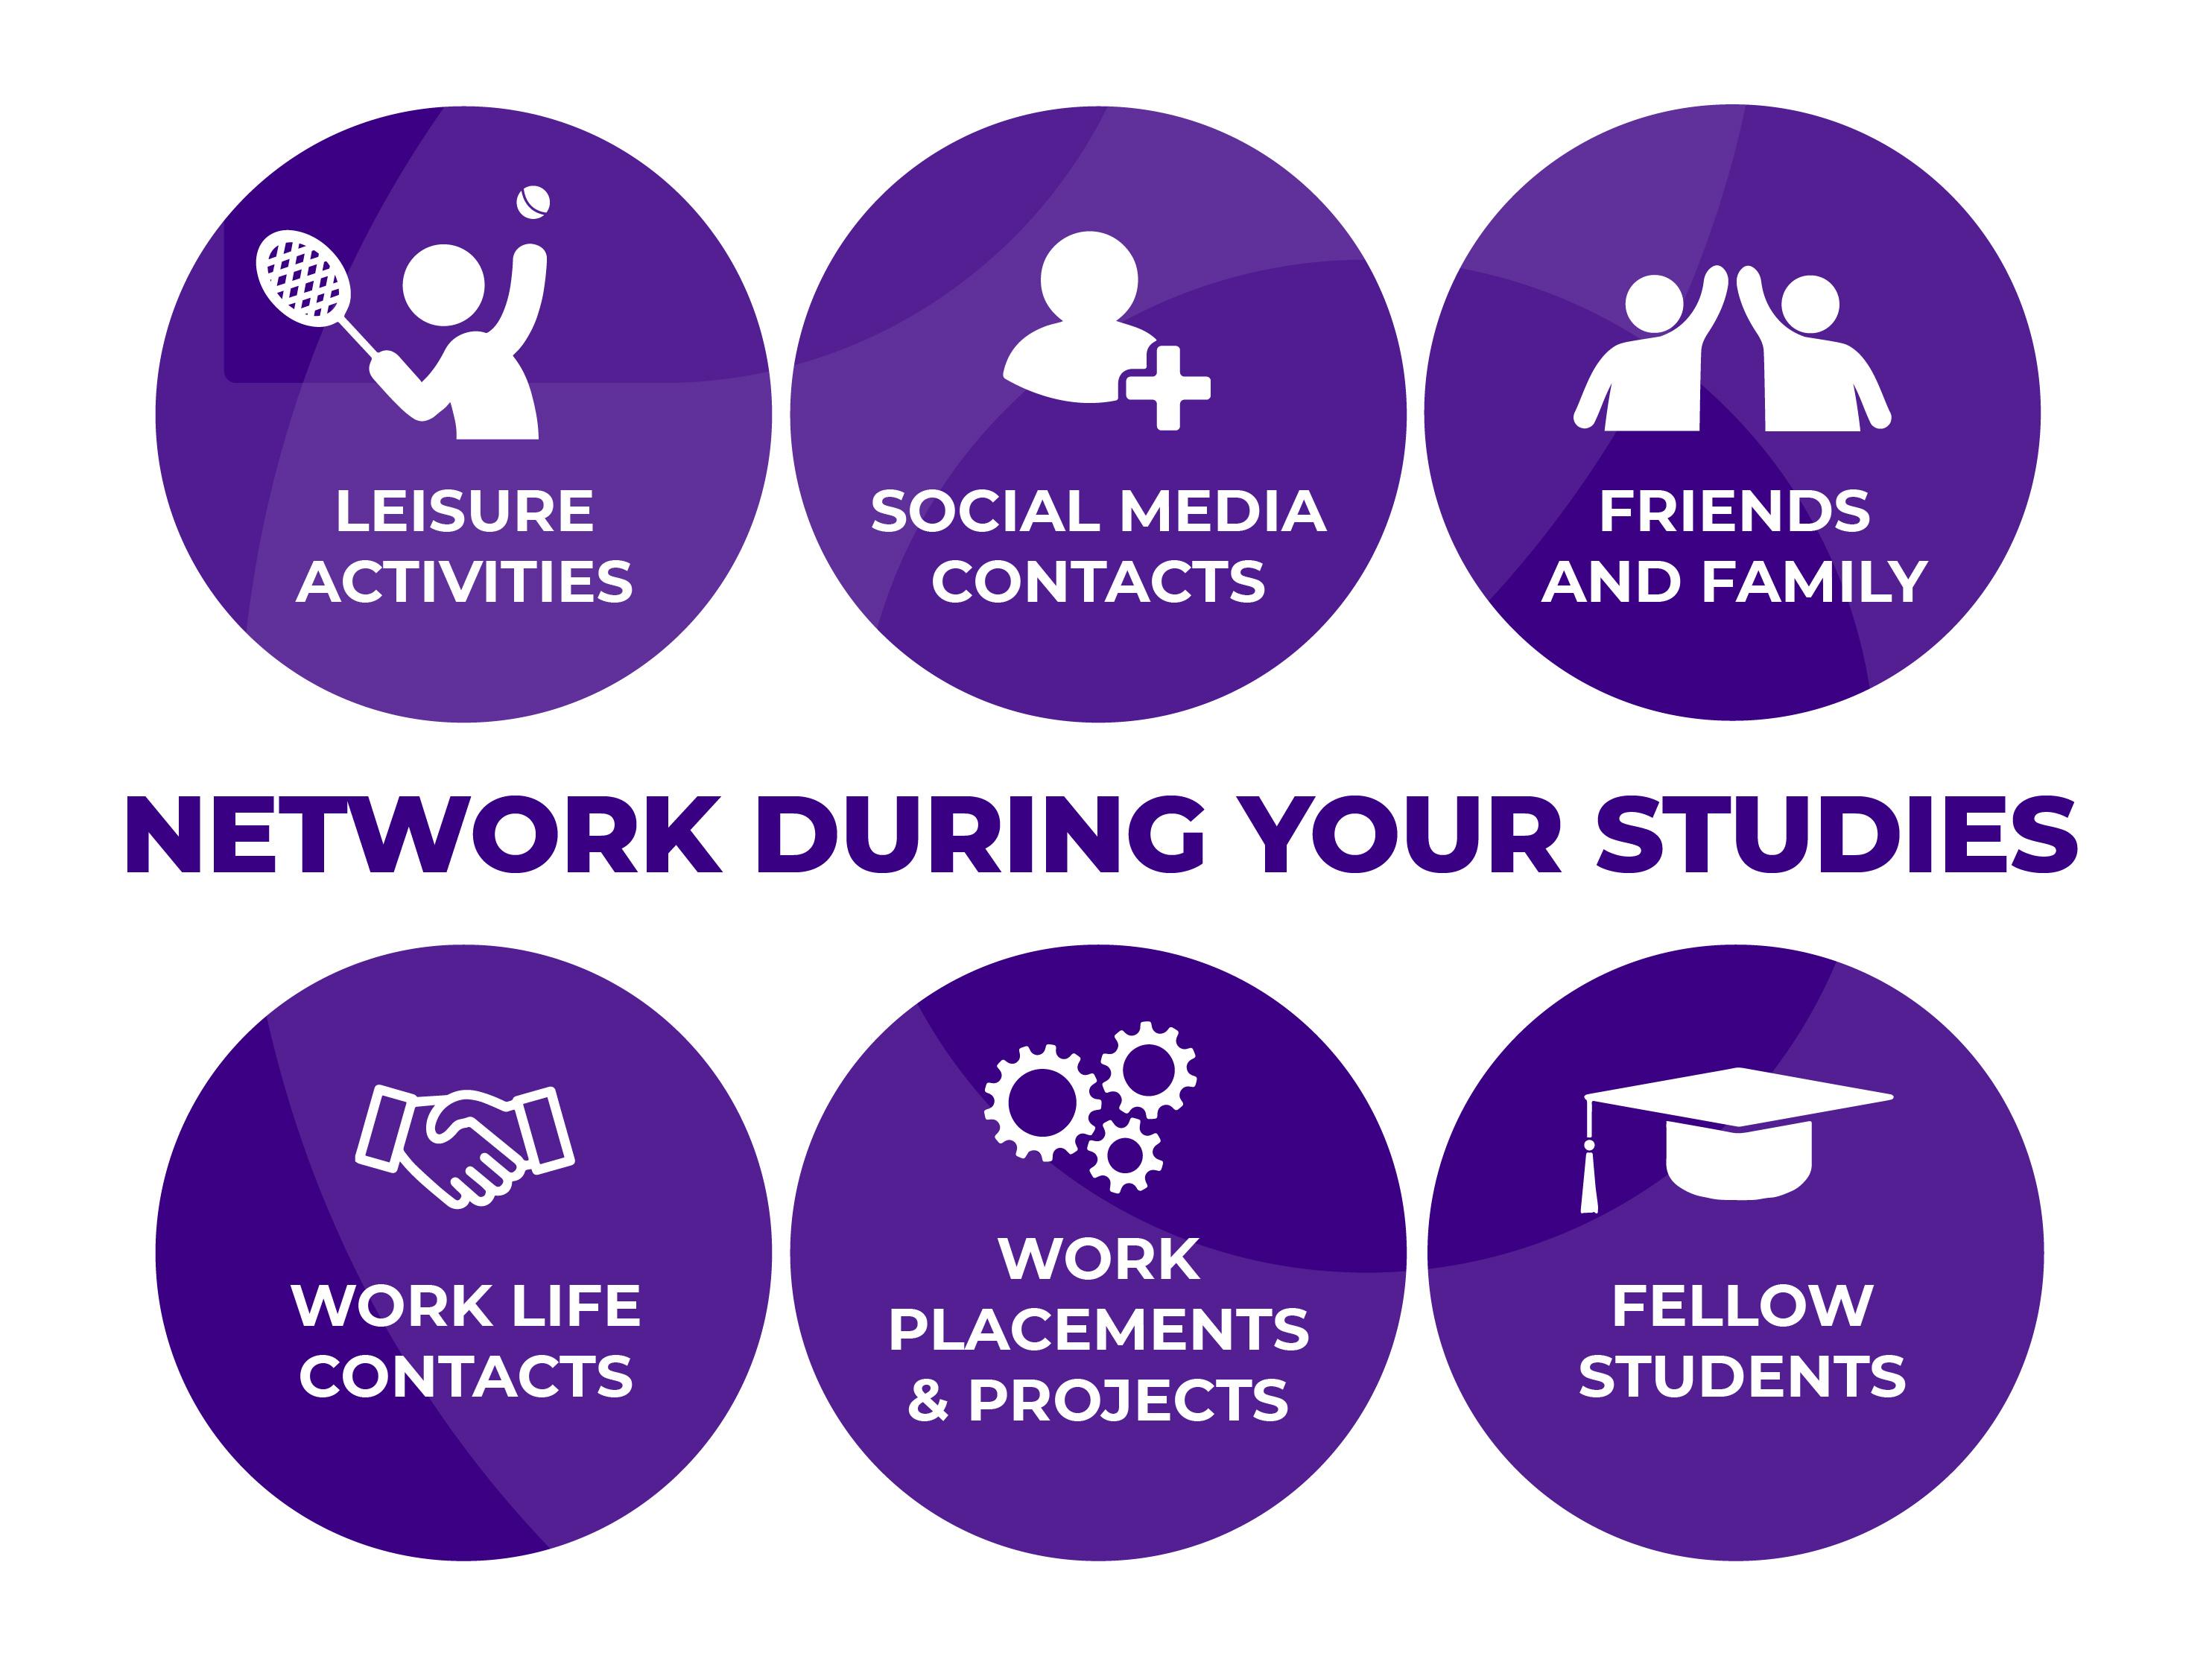 Ways to network during studies.